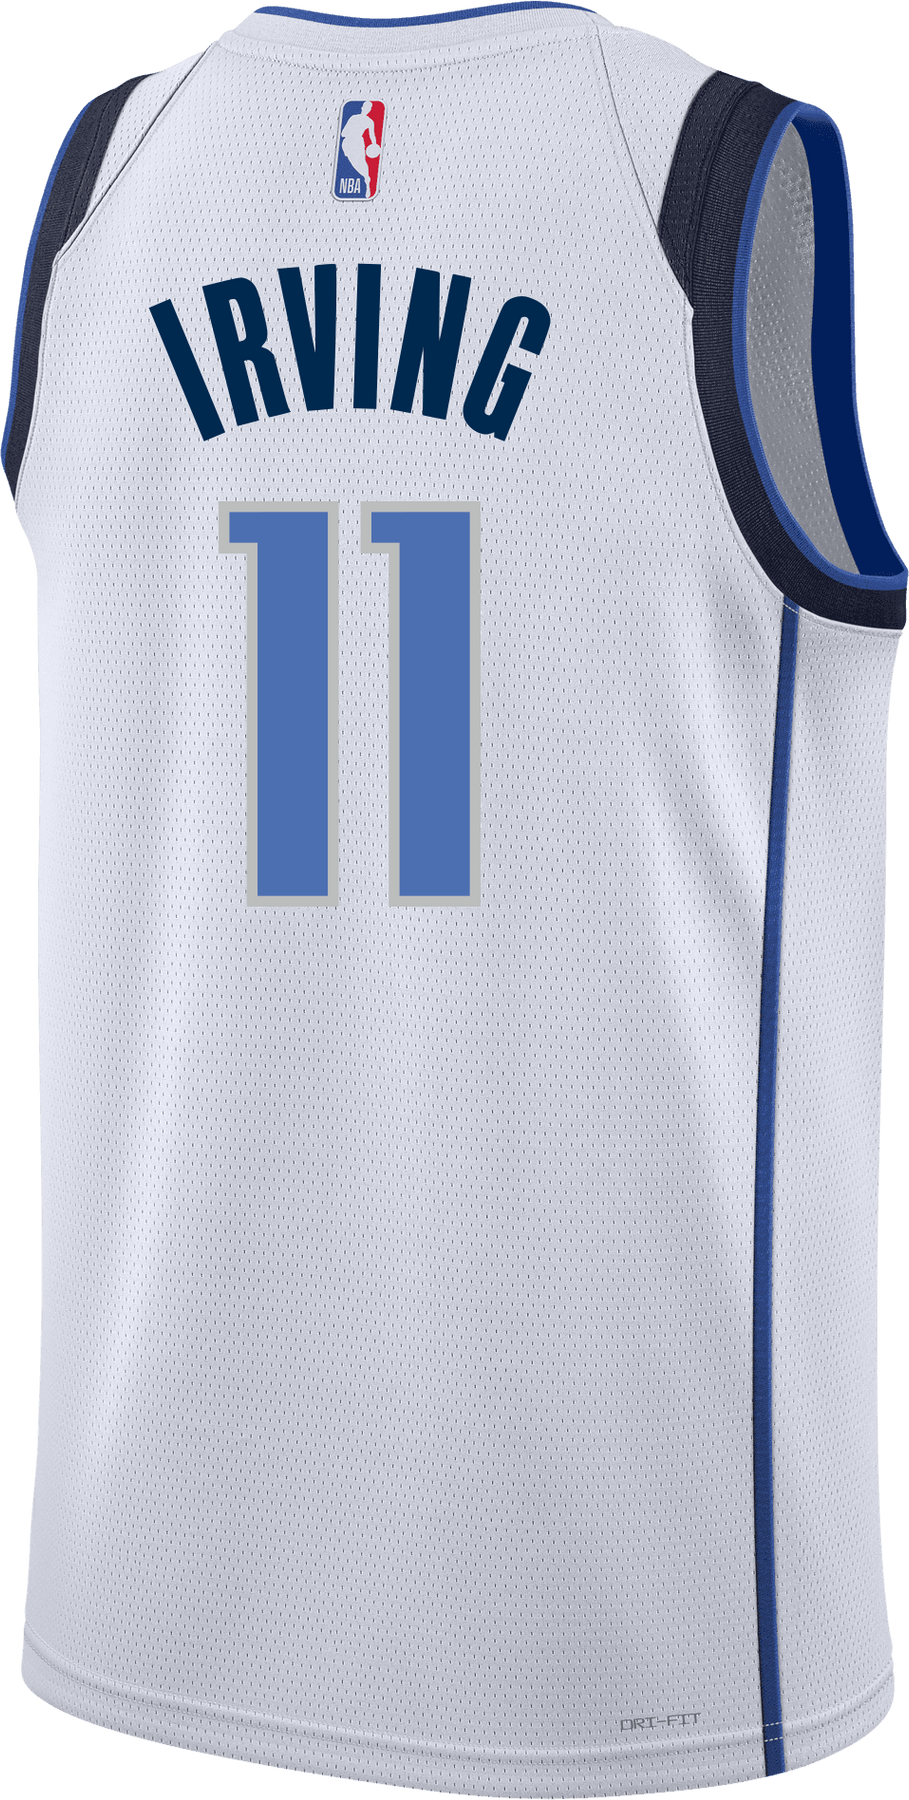 Kyrie Irving NBA Jerseys, NBA Jersey, NBA Uniforms